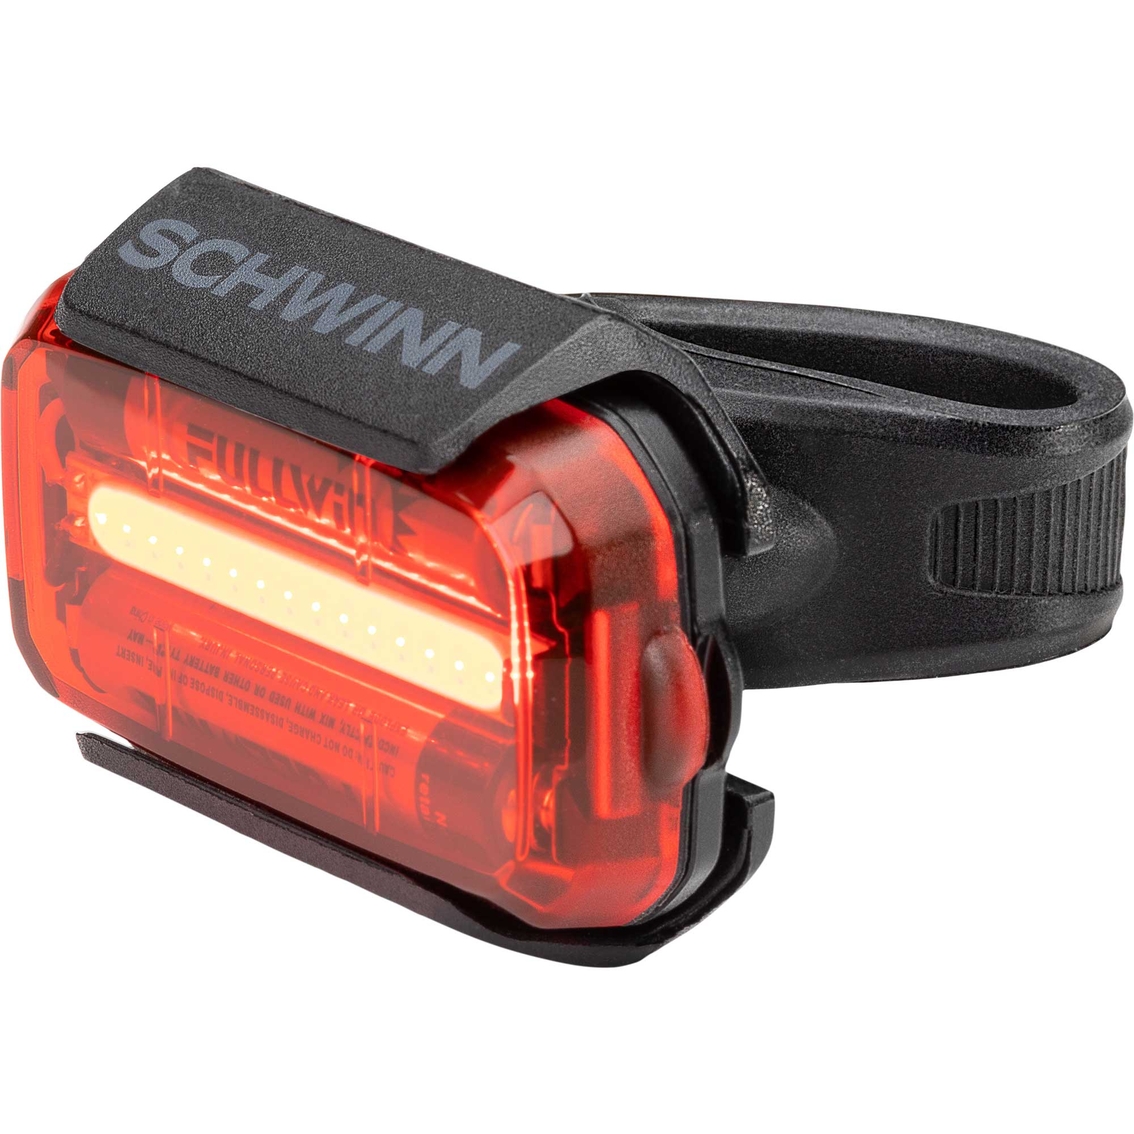 Schwinn 500 Lumen USB Rechargeable Bike Light Set - Image 3 of 5